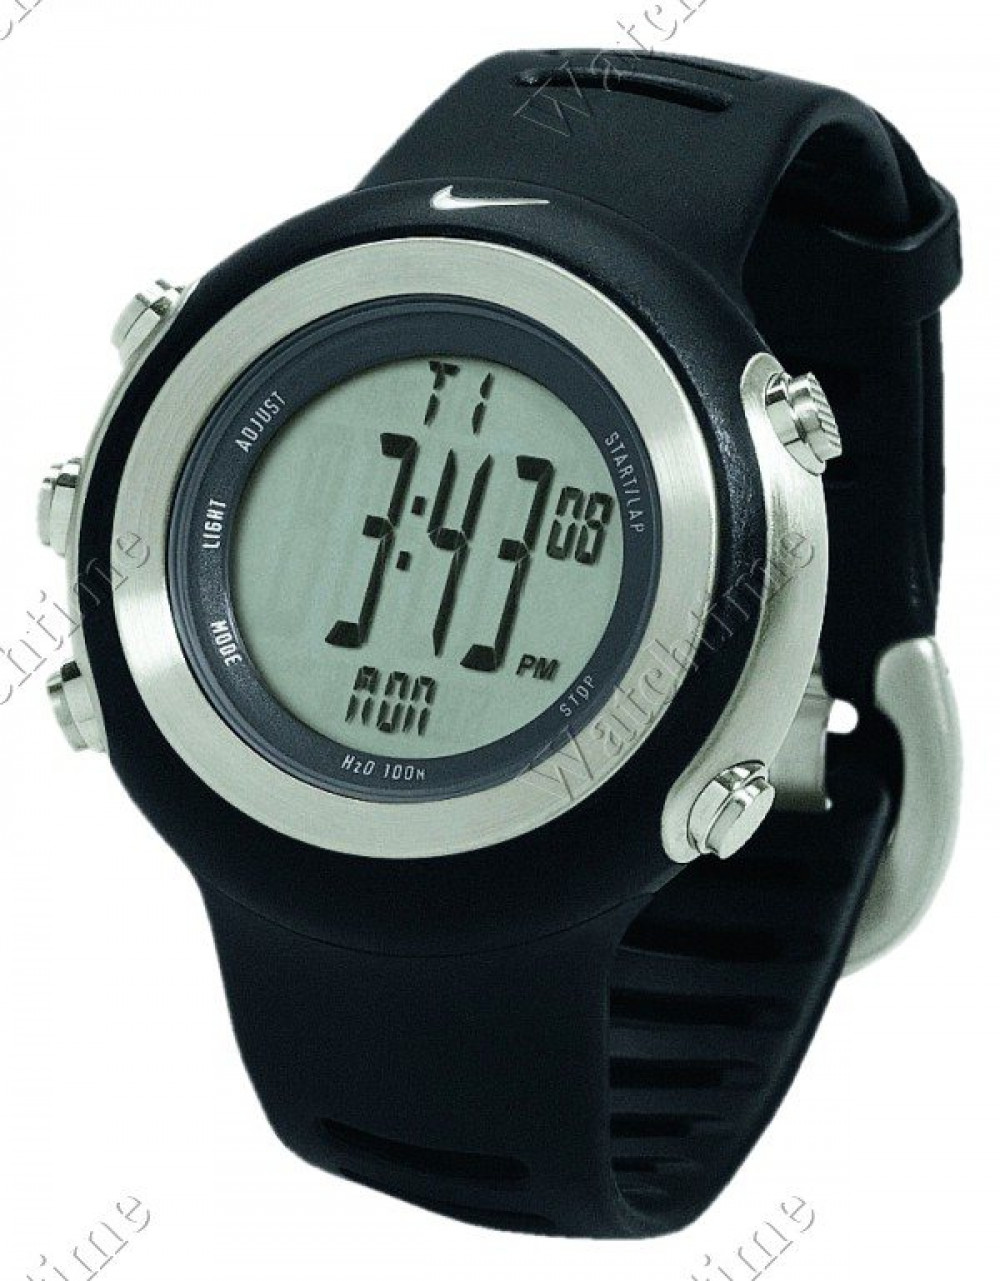 Zegarek firmy Nike, model Oregon Chronograph